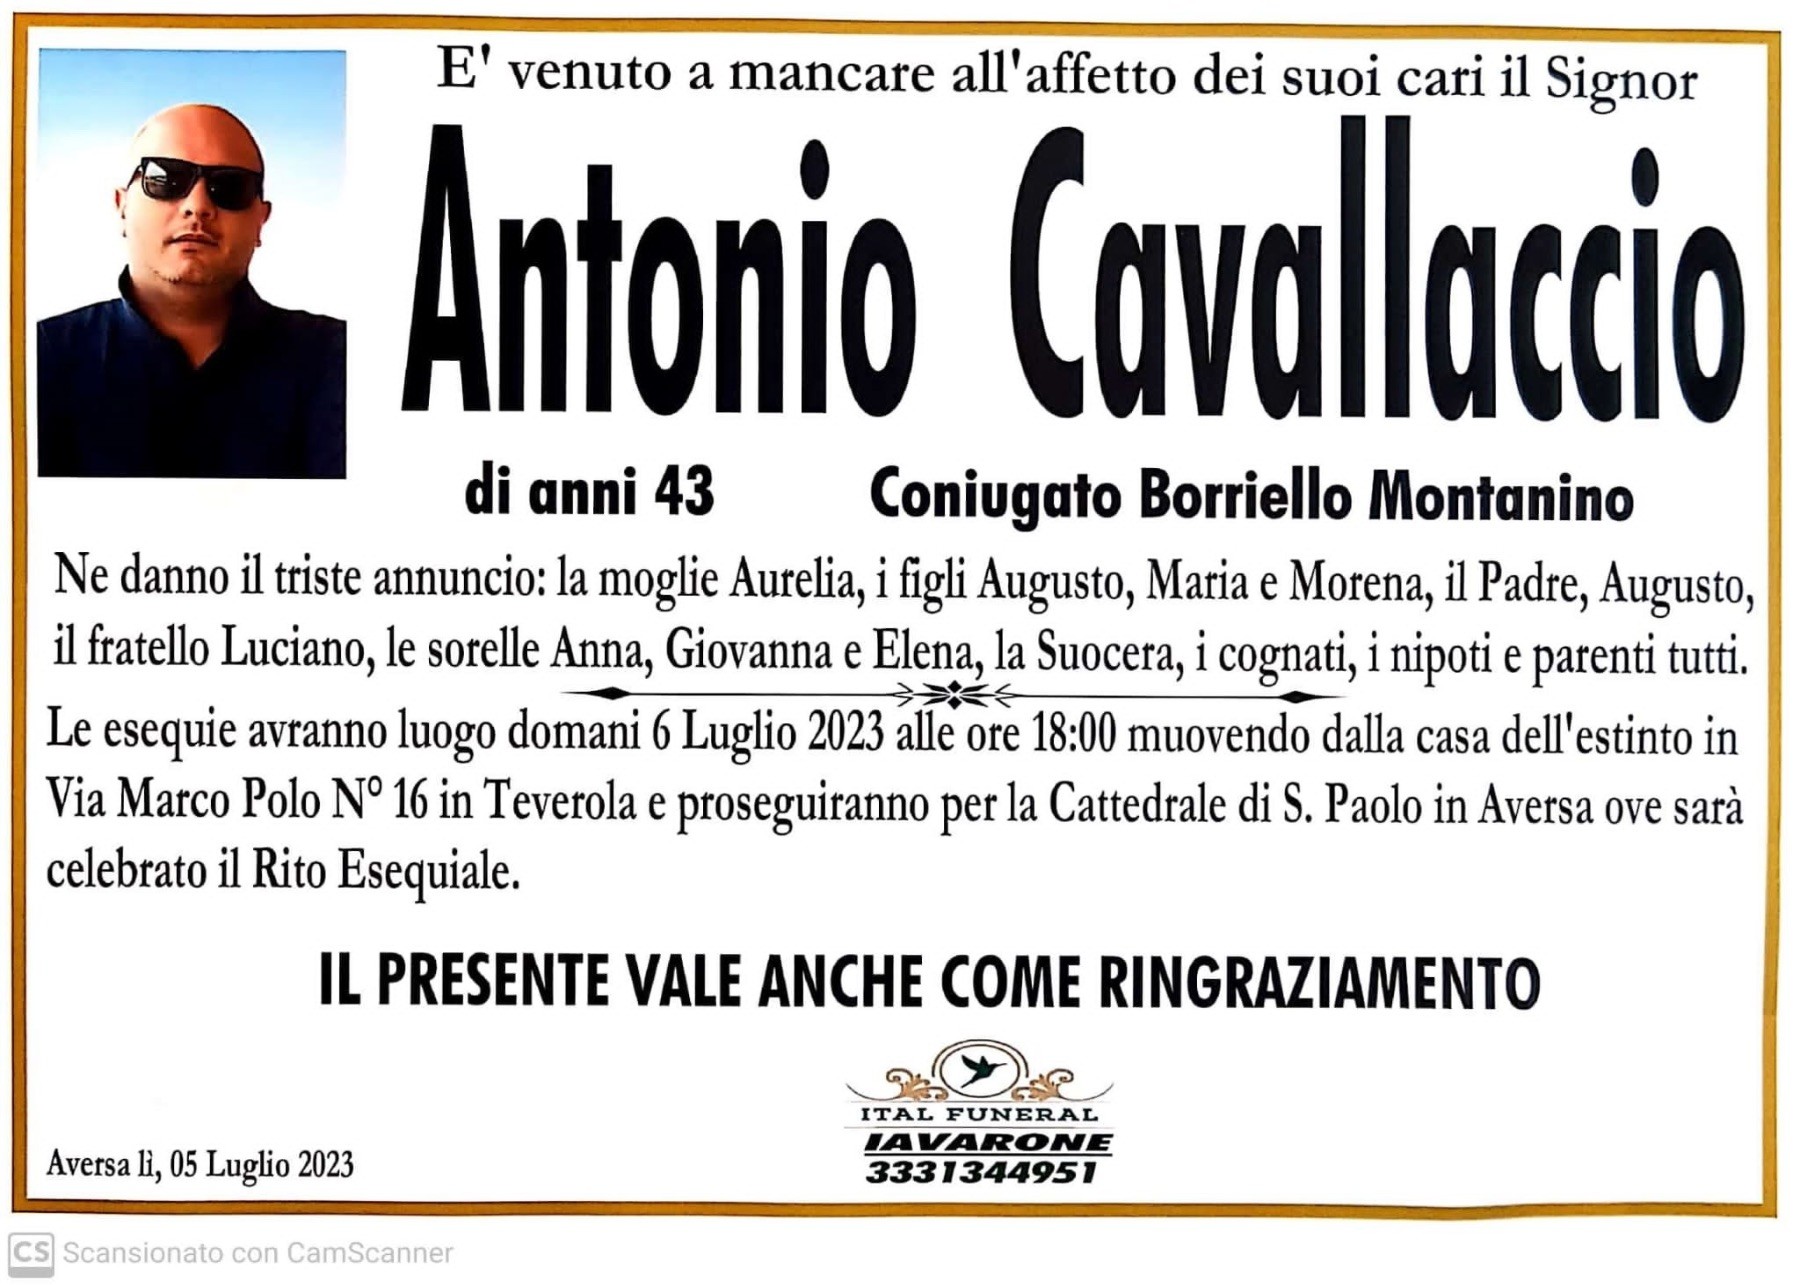 Antonio Cavallaccio